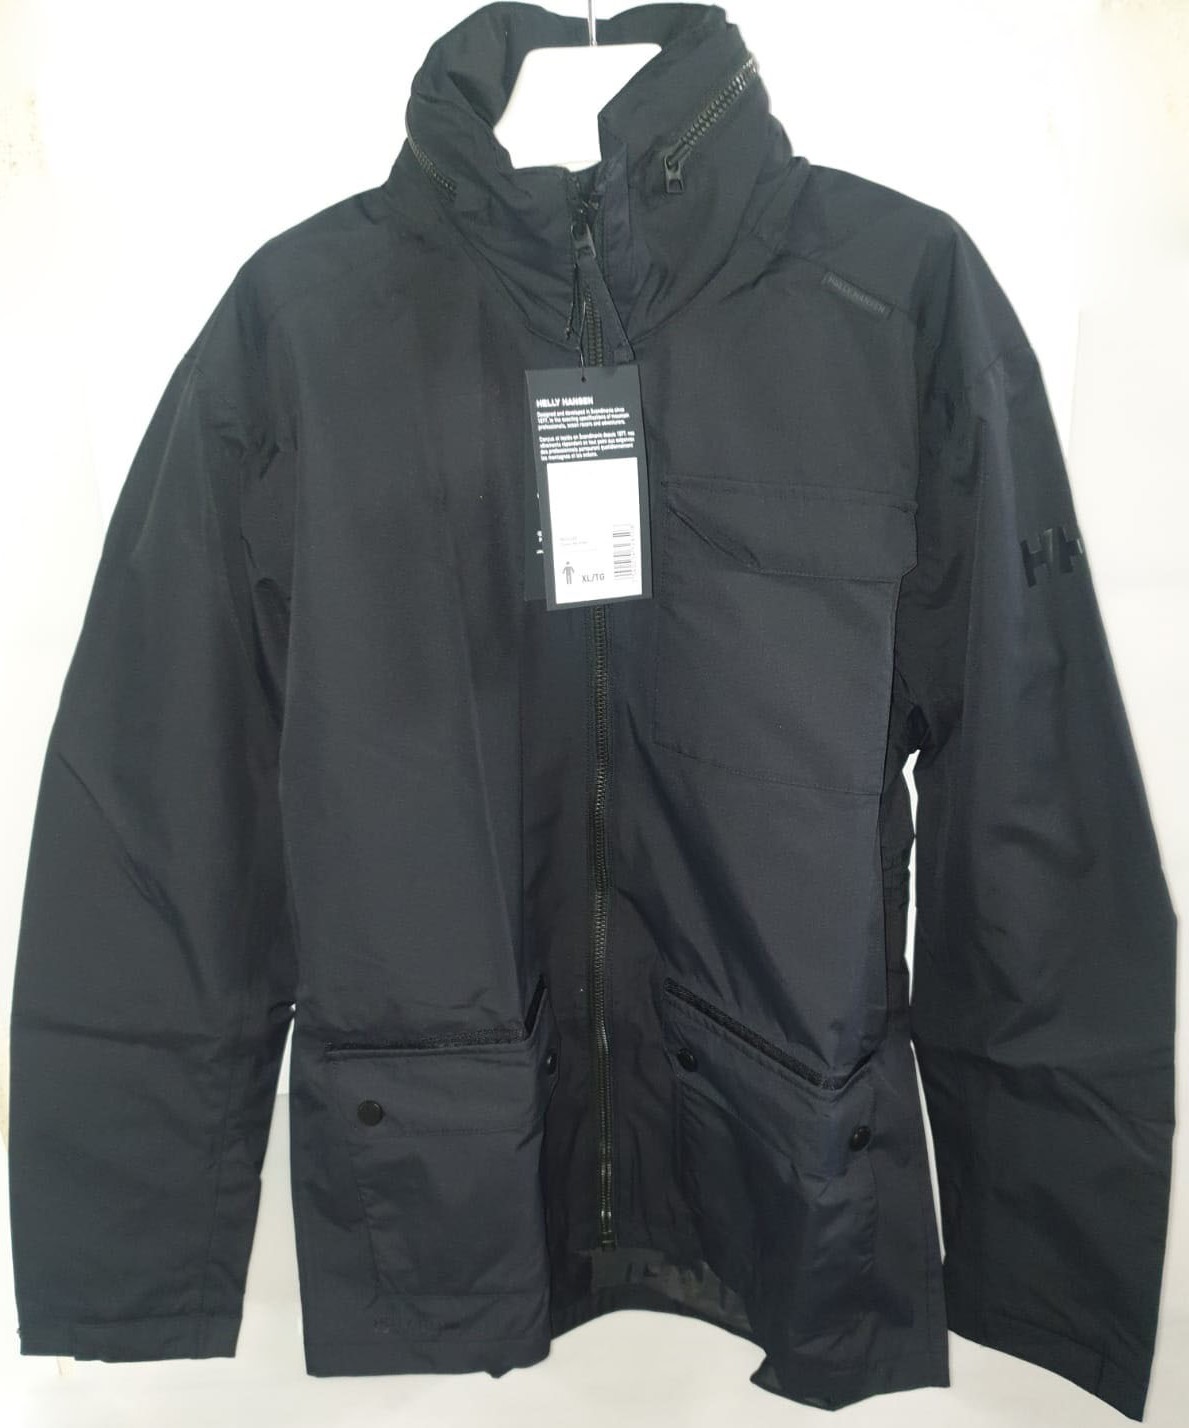 Helly Hansen Highlands Rain Jacket, Black, XL | eBay